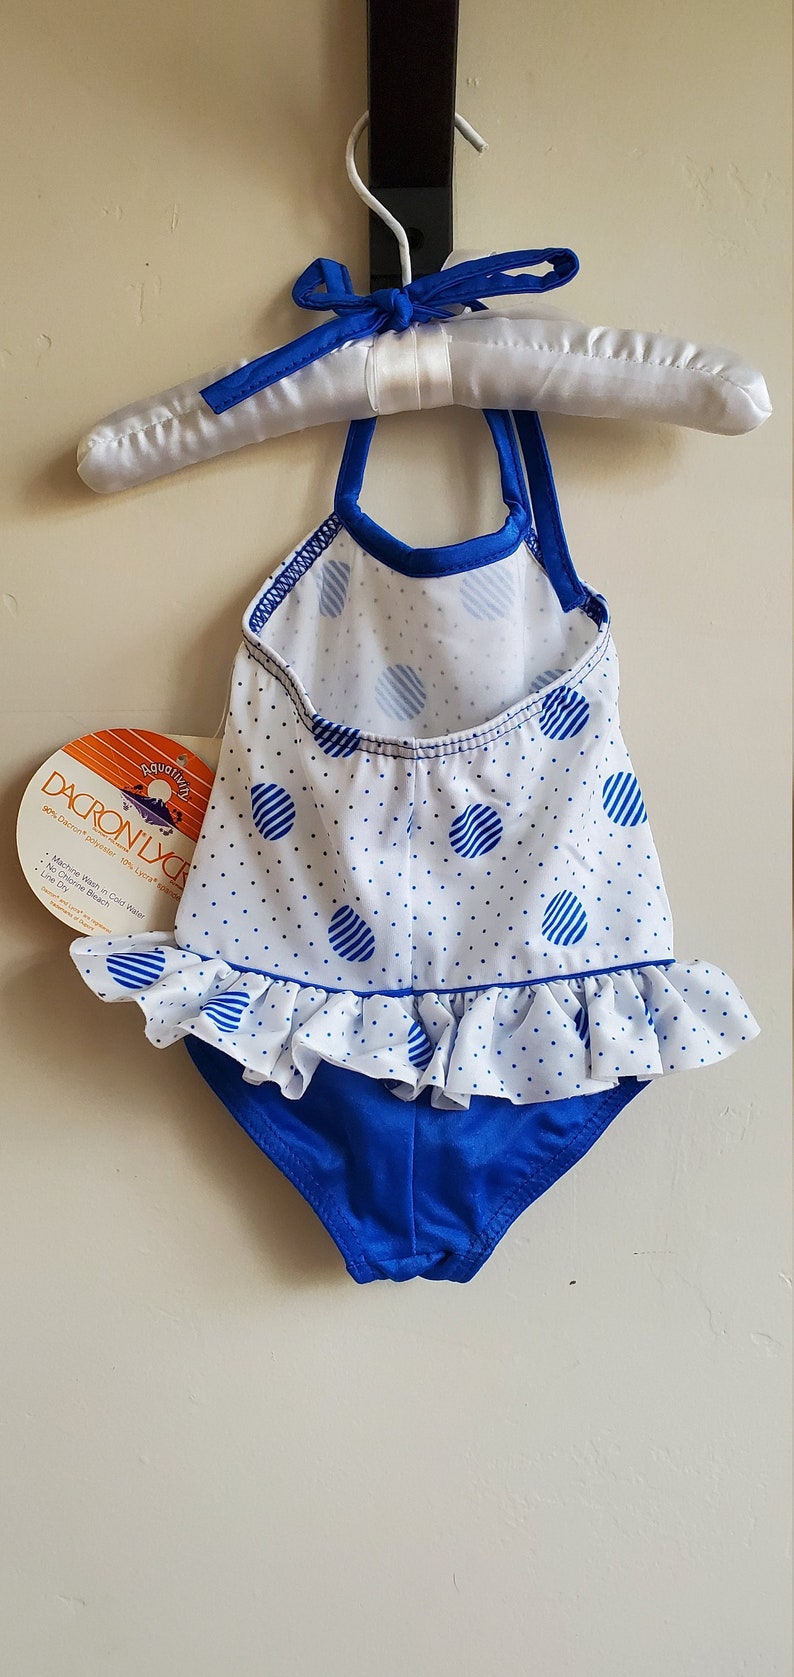 Vintage 1970s Girl's Infant Swimsuit Vintage Deadstock NWT Girls Infant Aquativity Swimsuit One Piece Blue White Polka Dot Ruffle ILGWU image 7